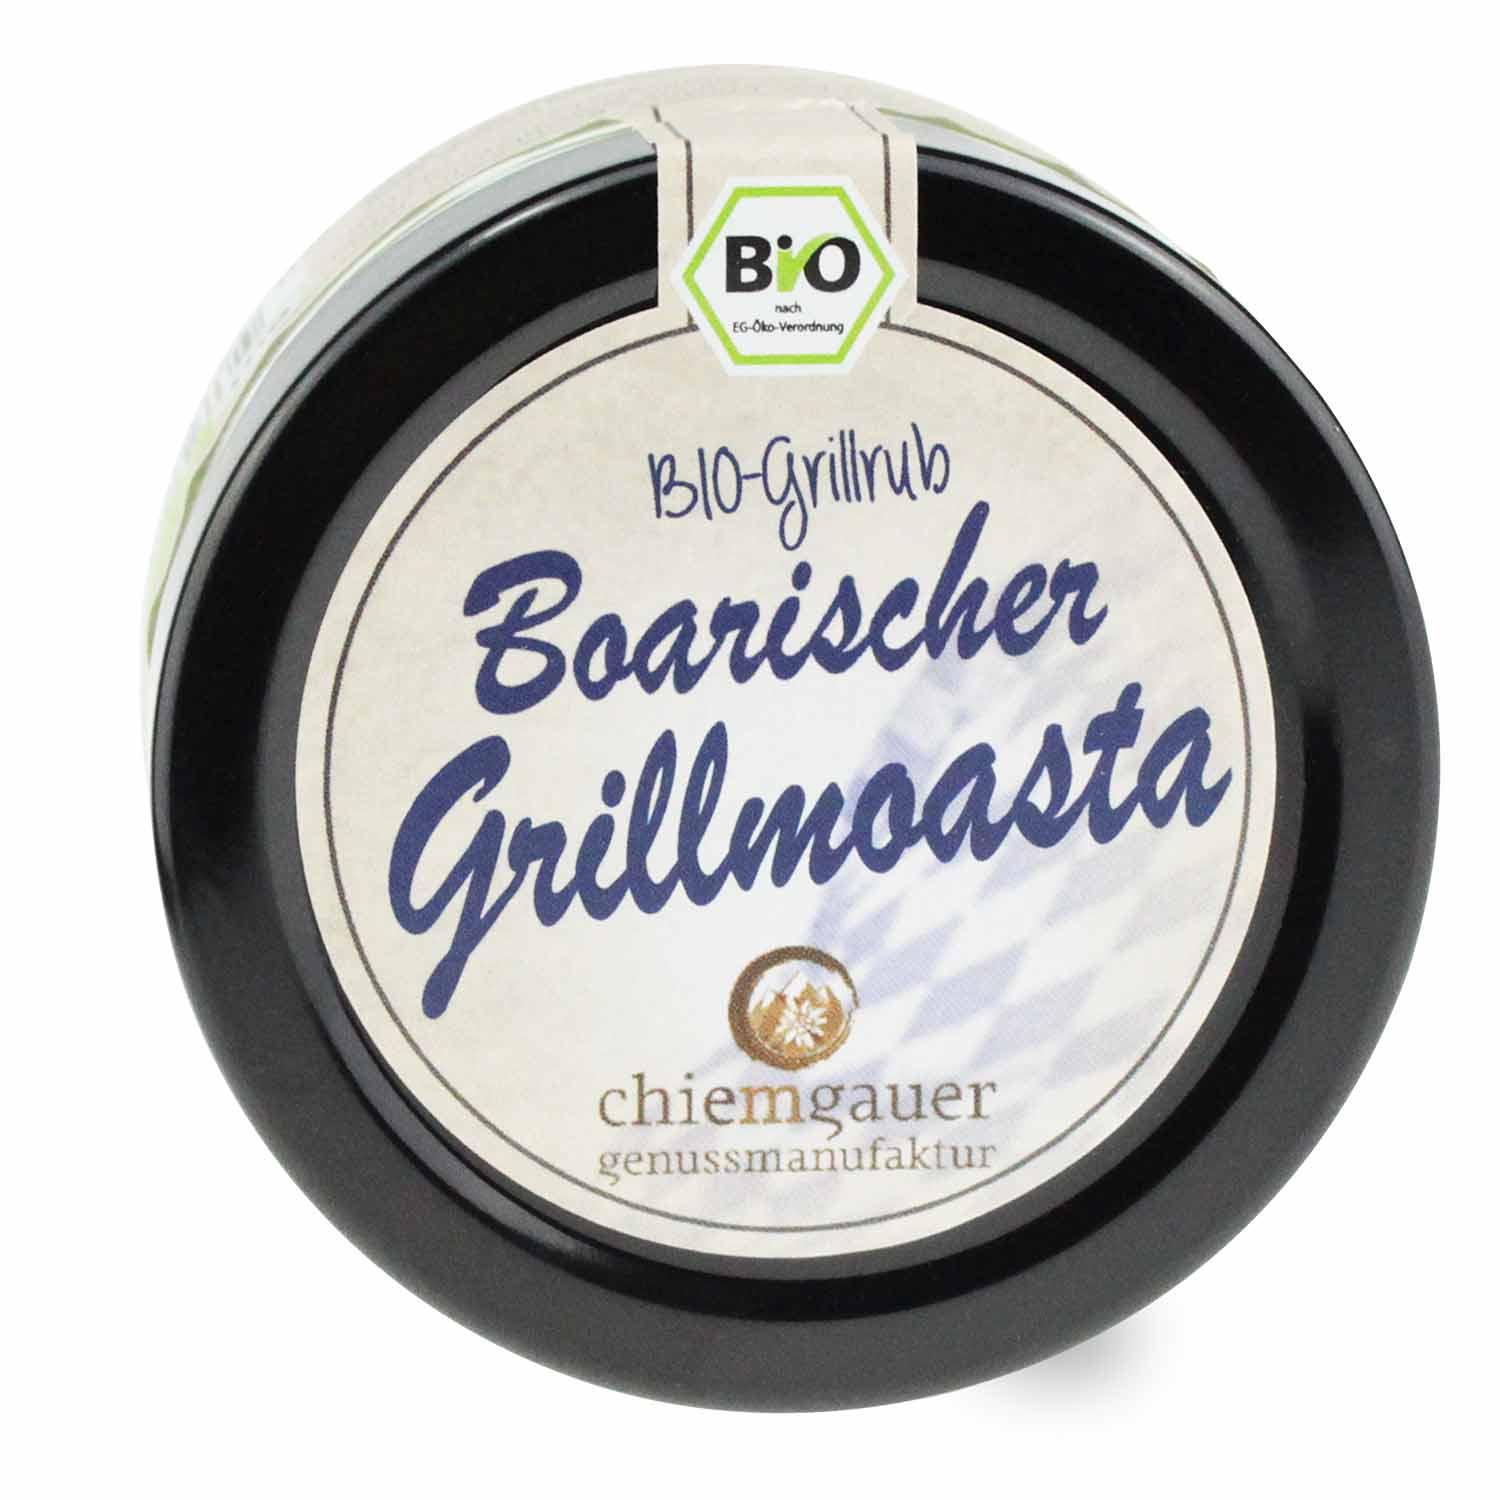 Bio-Grillrub-Salz "Boarischer Grillmoasta" - bavariashop - mei LebensGfui